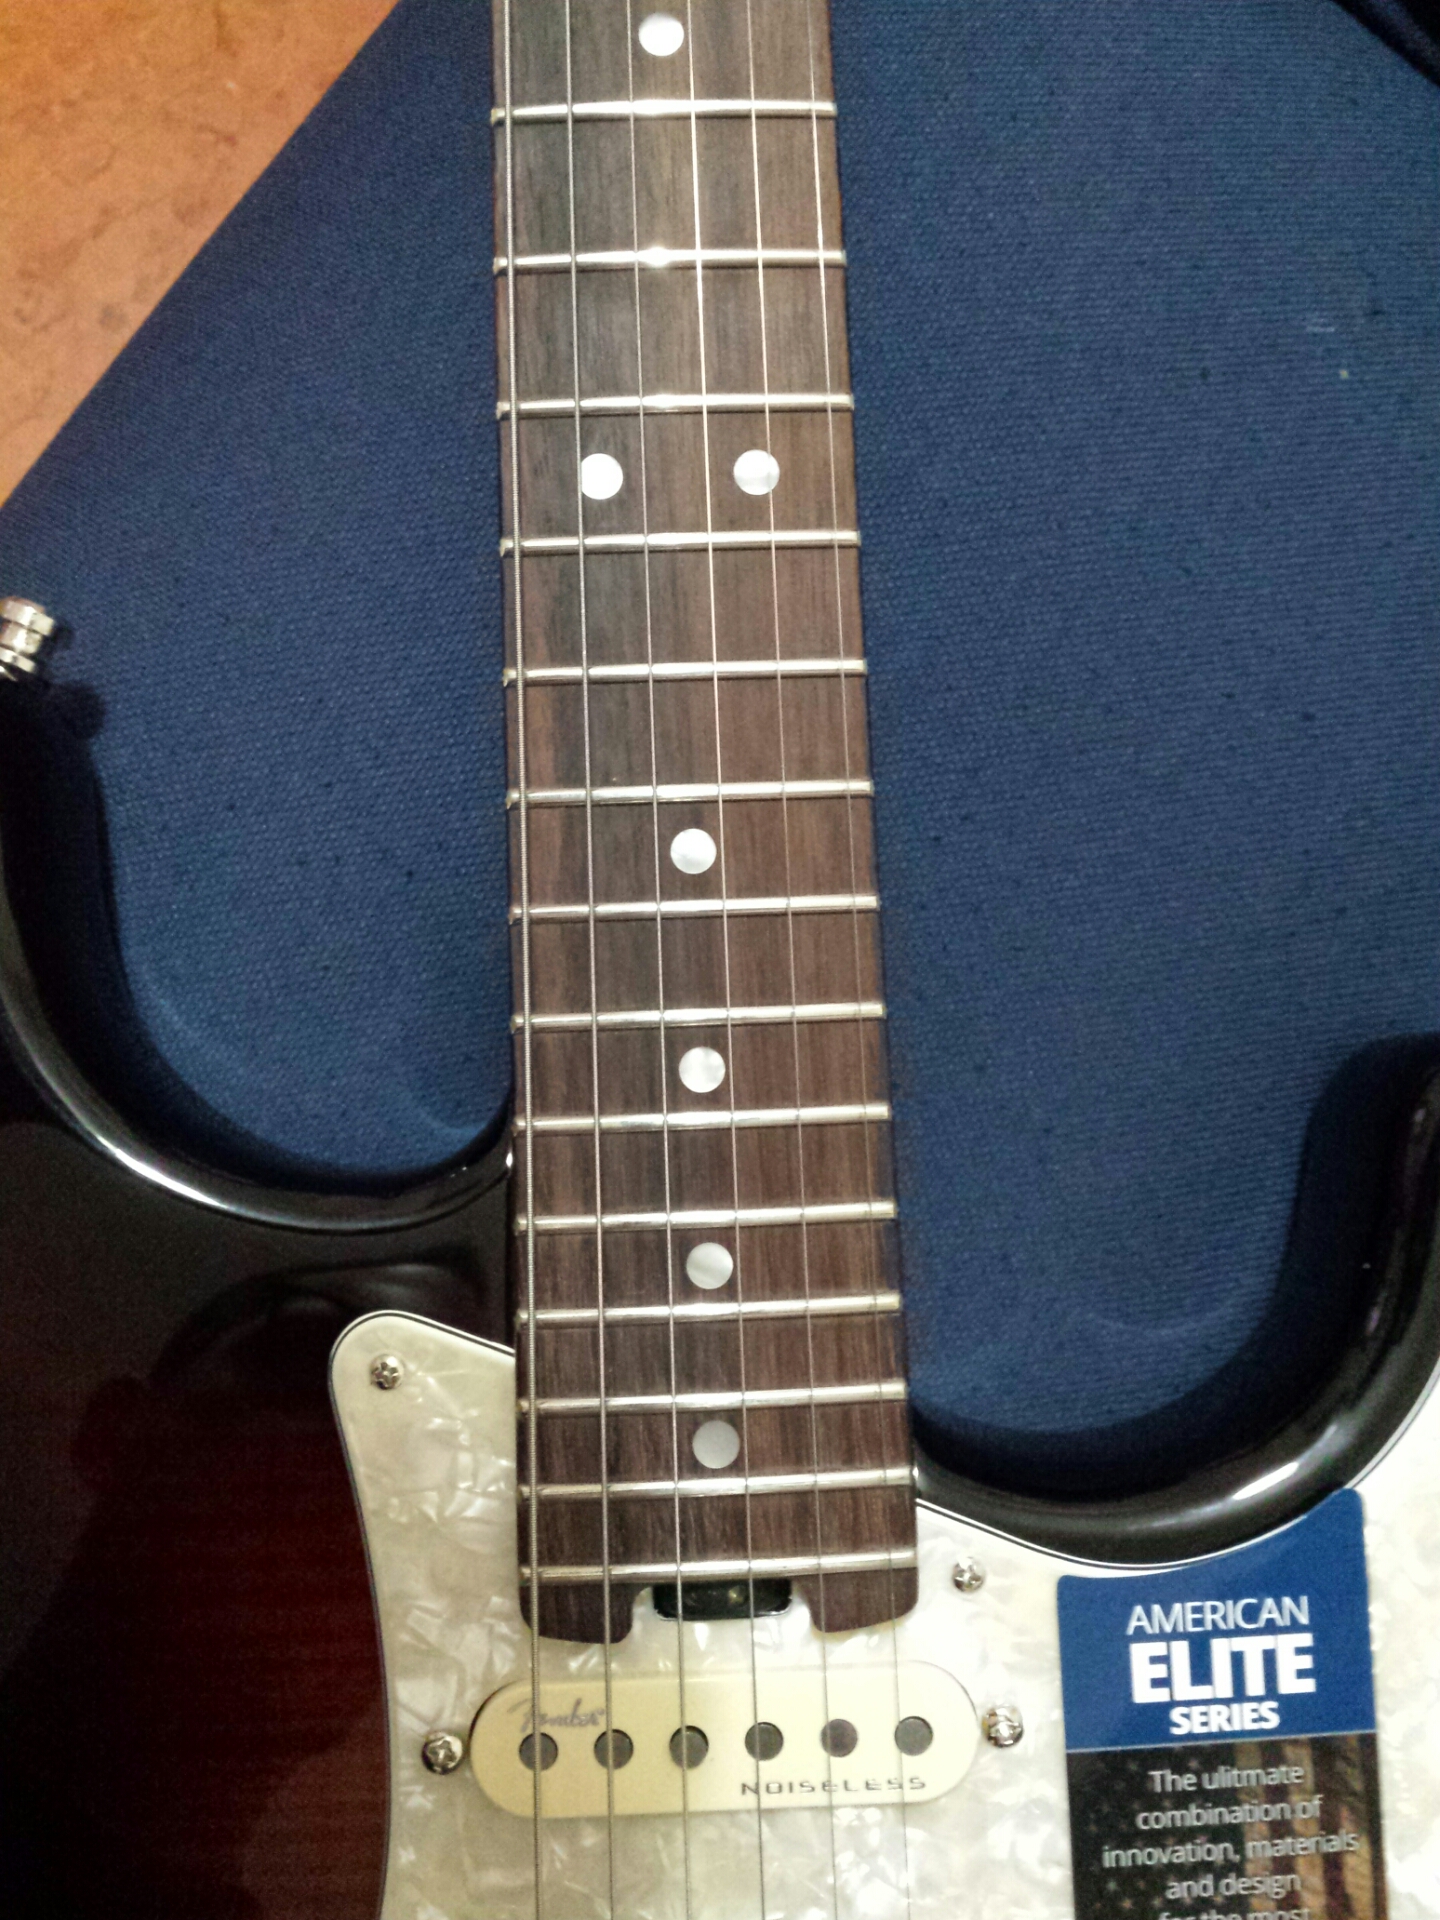 Problema nuova Fender Stratocaster Elite 